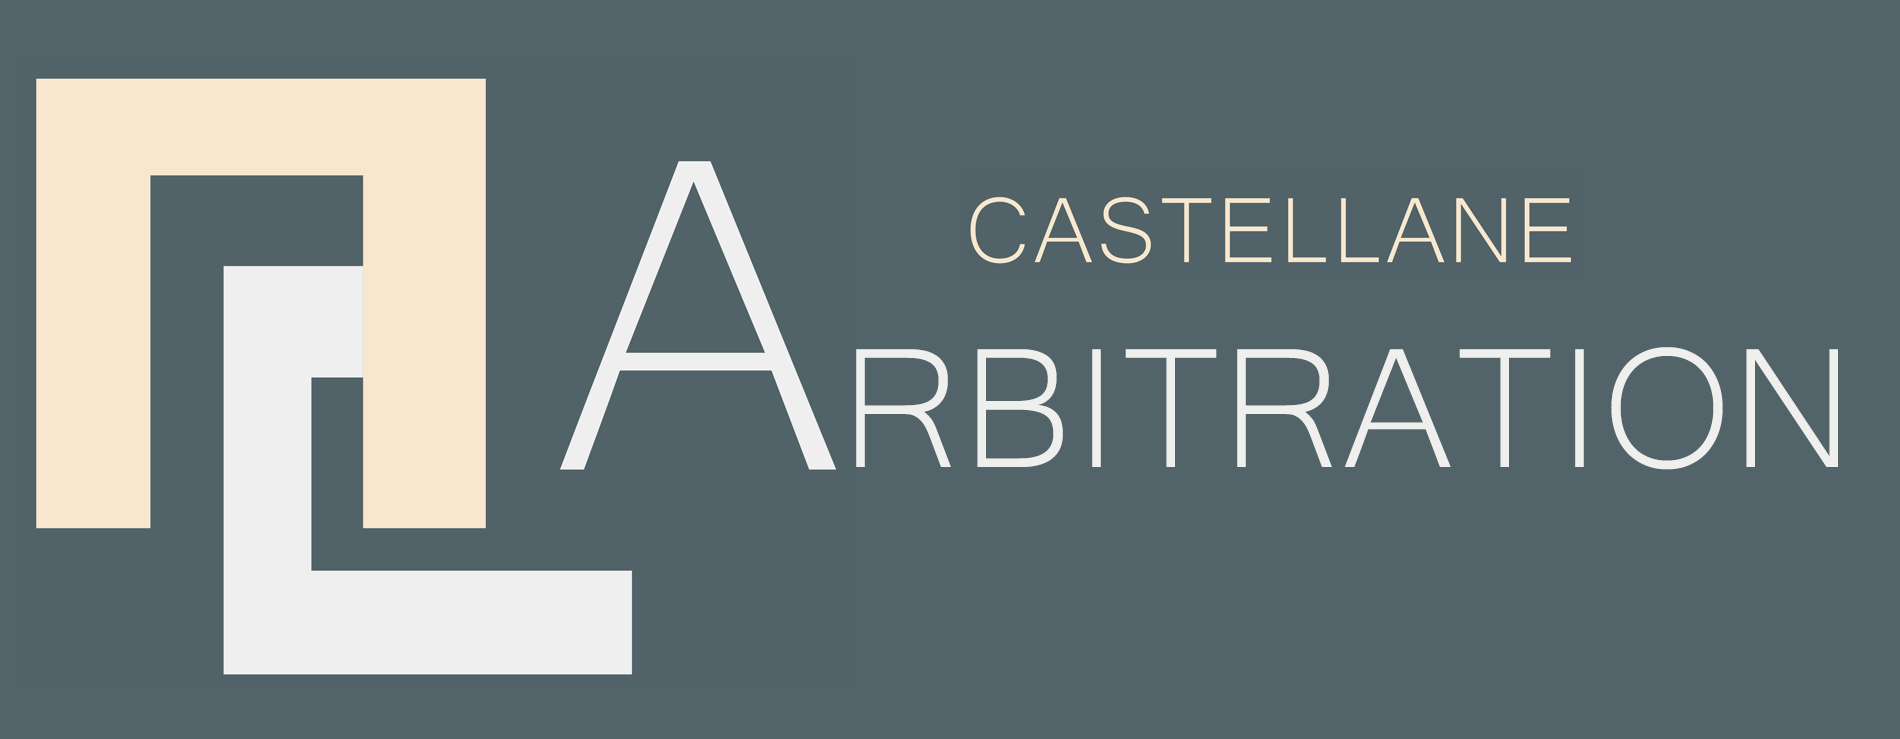 Castellane Arbitration